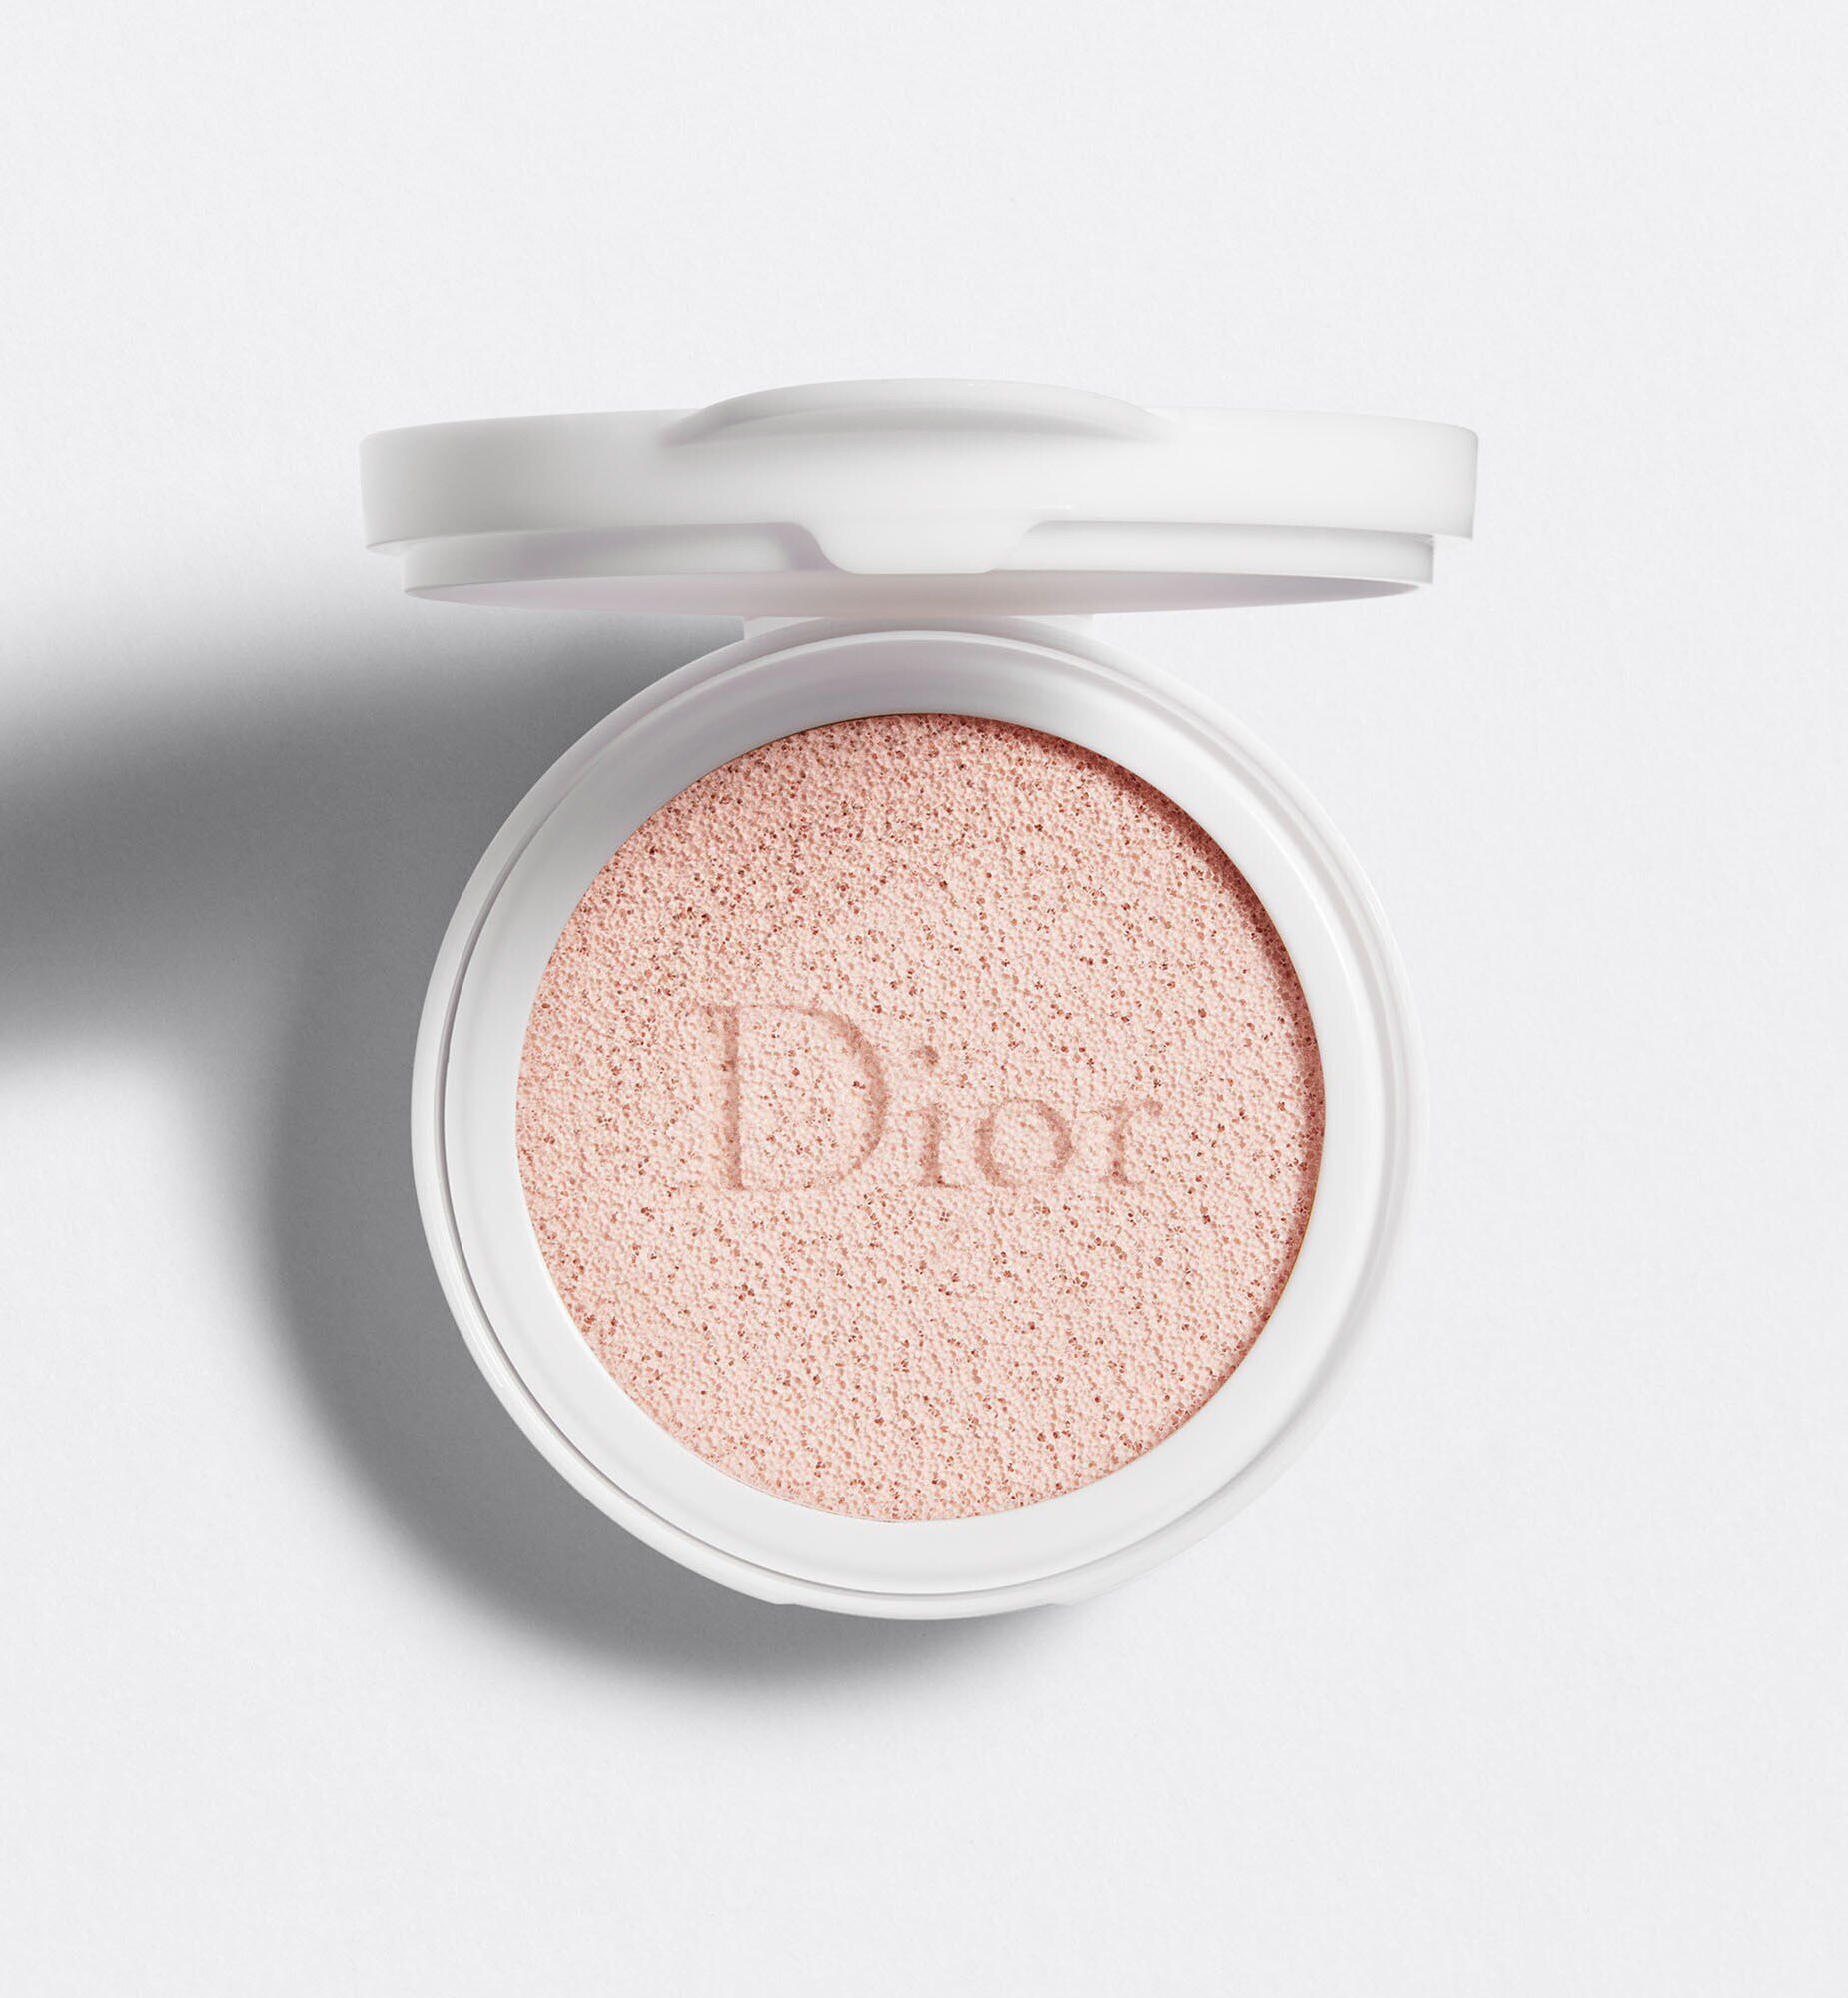 Phấn Nước Dior Capture Totale Dreamskin Perfect Skin Cushion  Mỹ phẩm  chính hãng